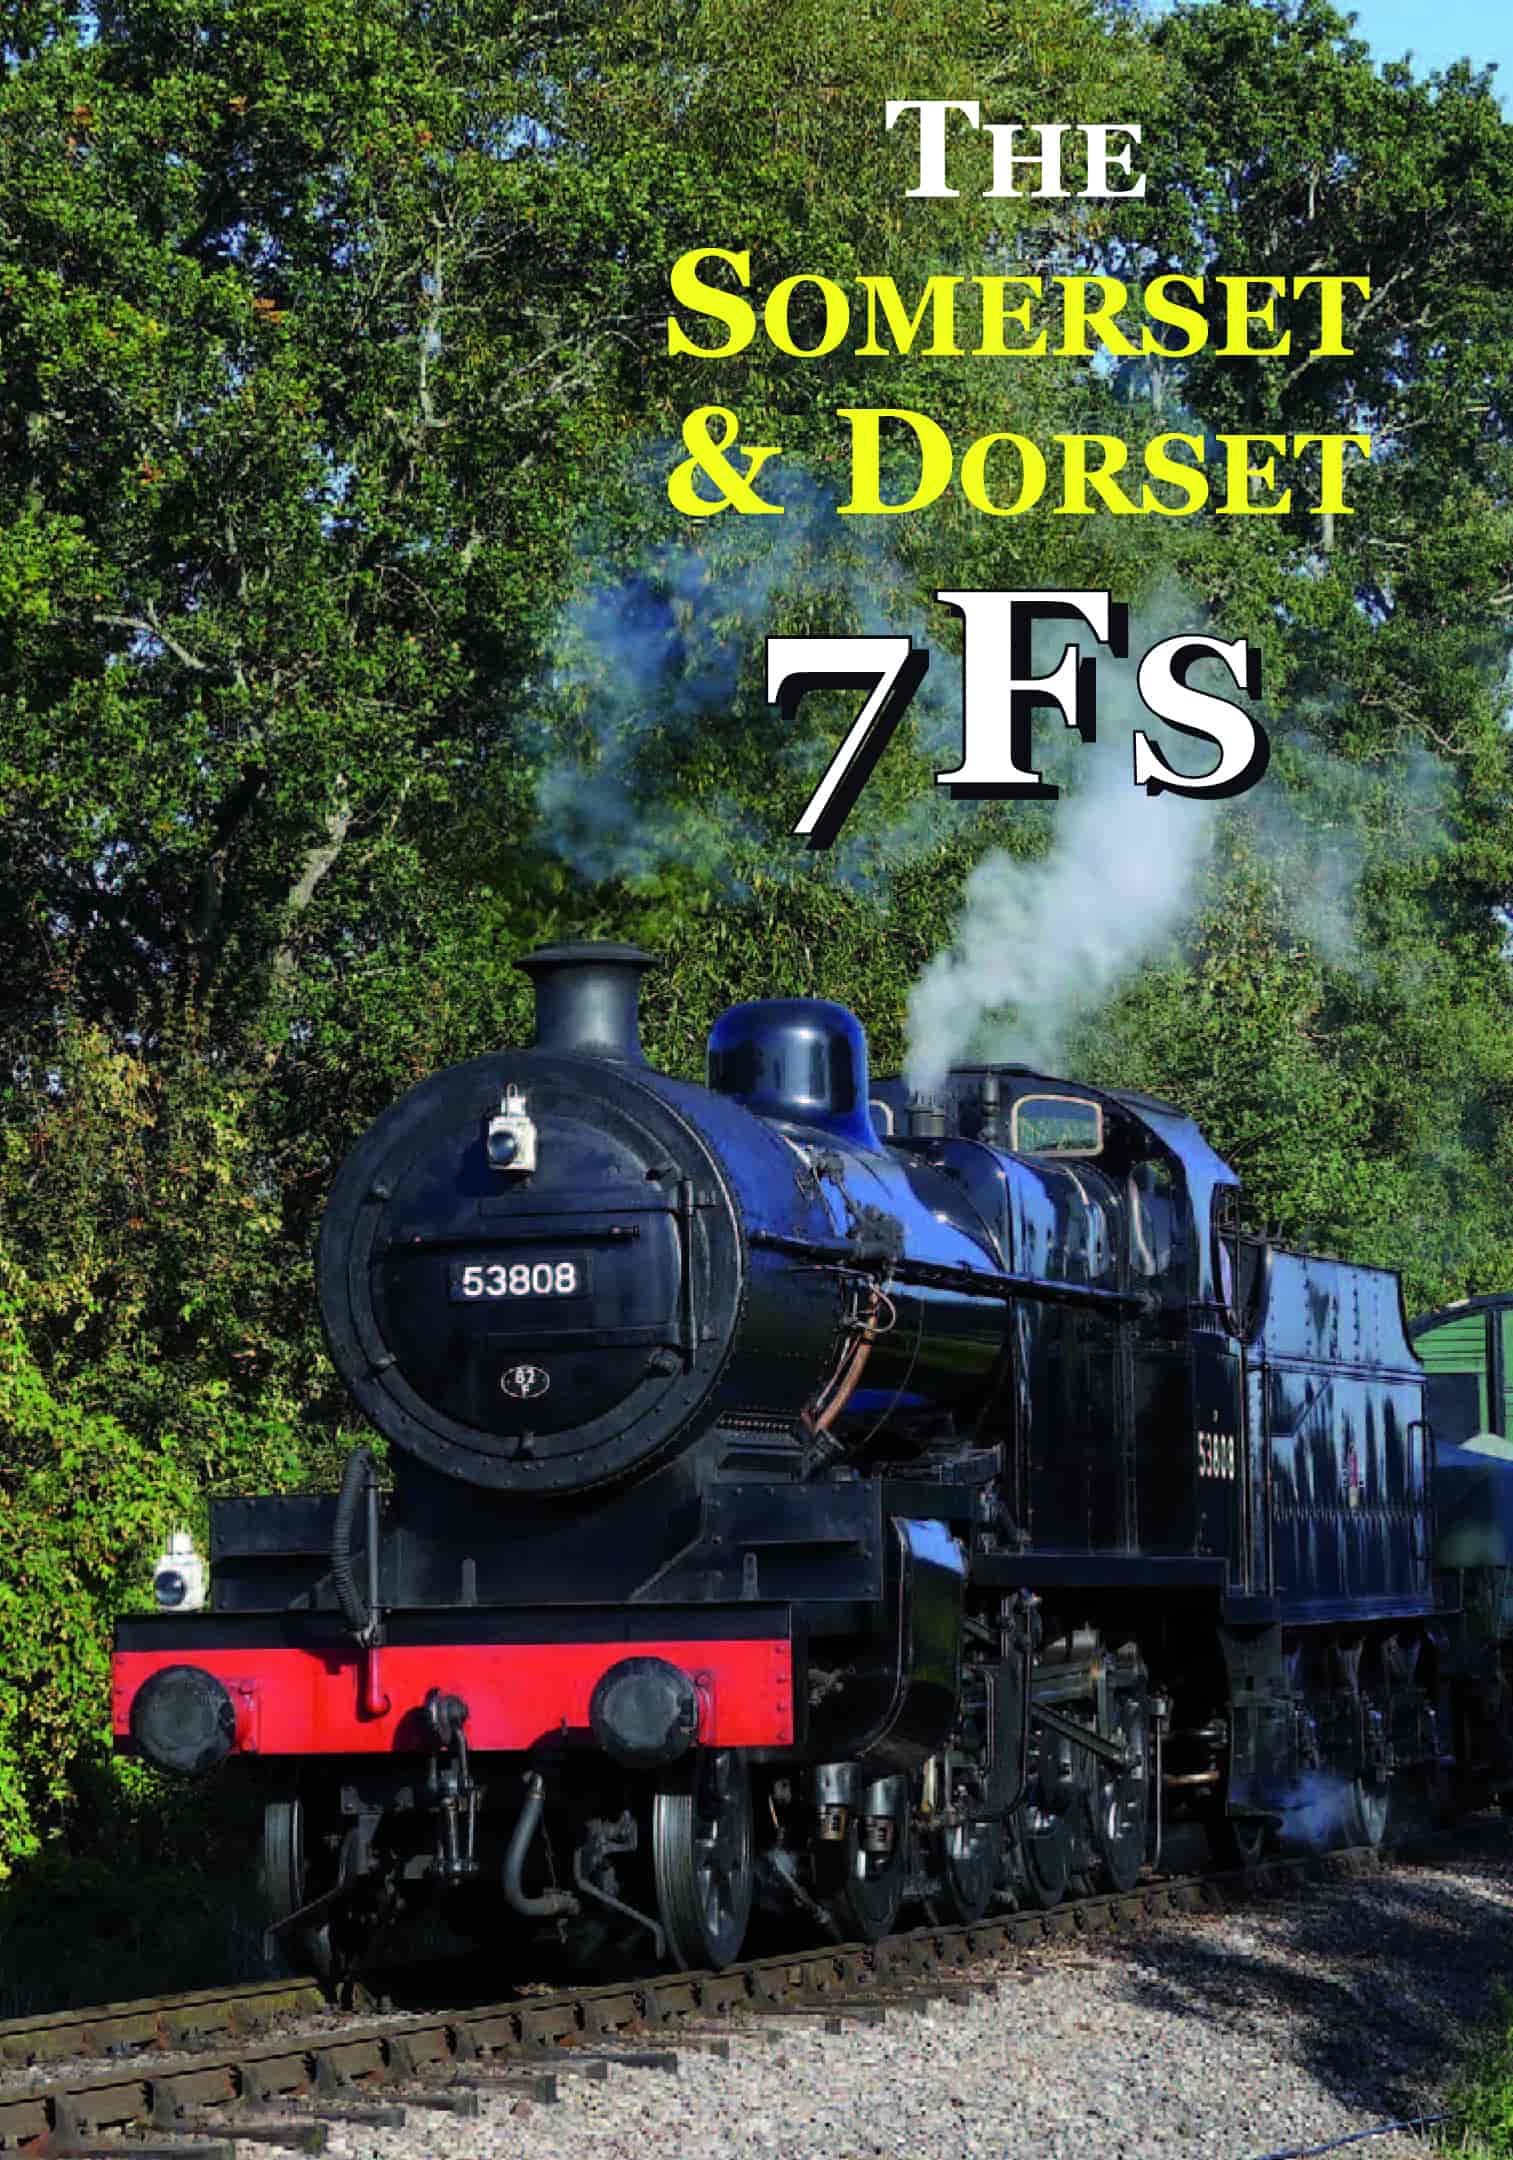 The Somerset & Dorset 7Fs